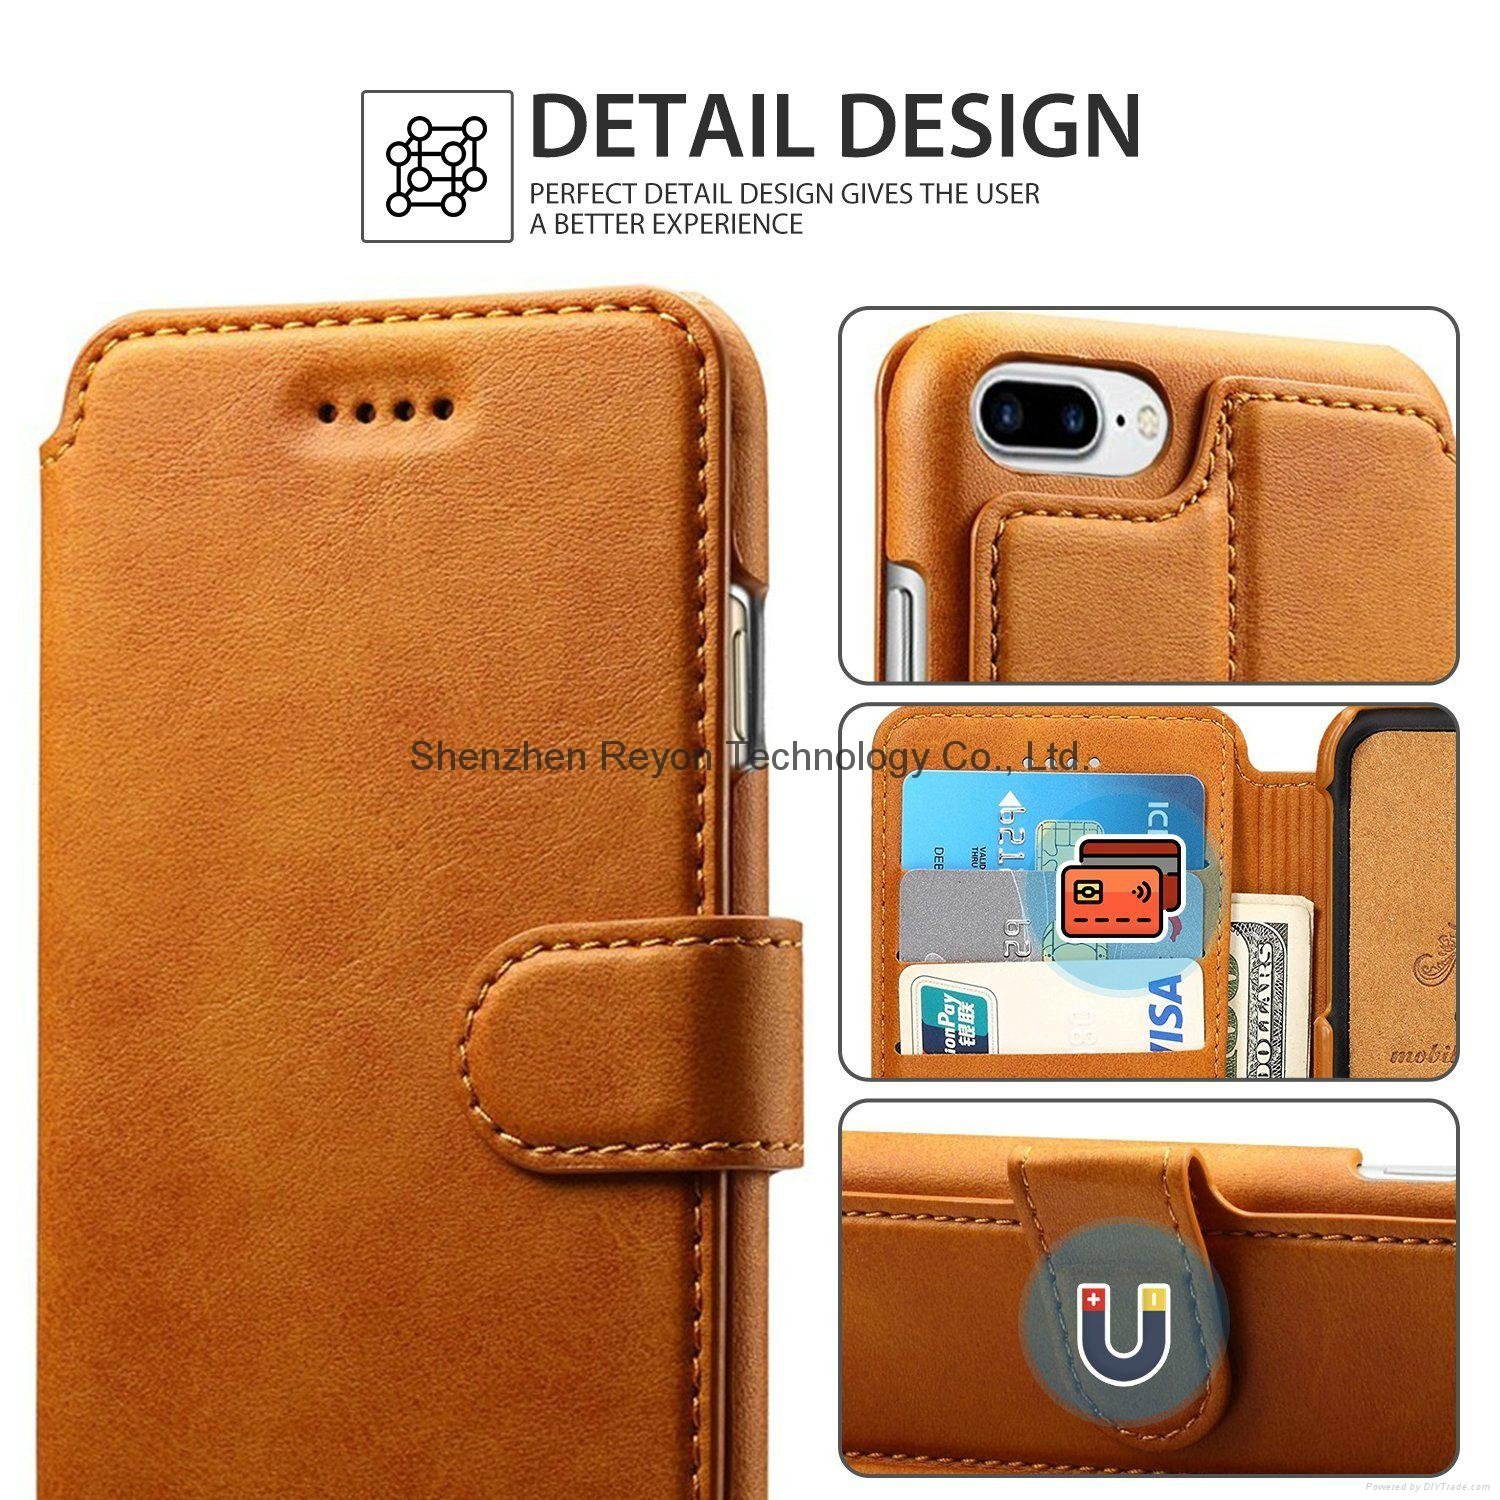 For iPhone 7 Plus Leather Case-Pasonomi [Slim Fit] Vintage Flip Case Cover wi 4